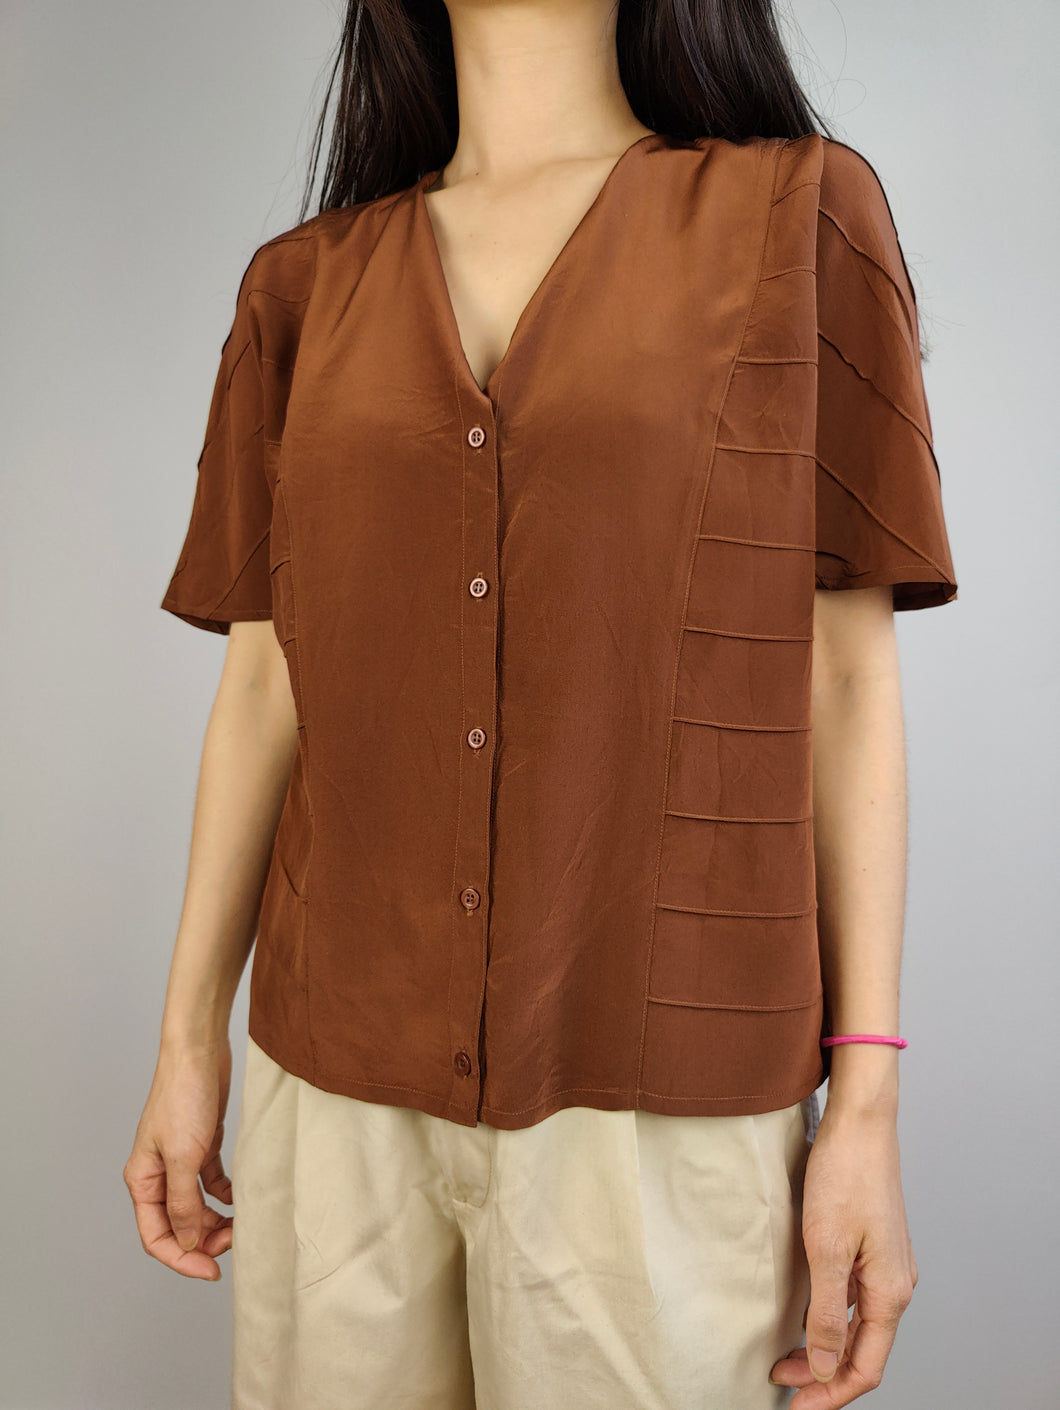 The Silk Brown Plain Short Sleeve Blouse | Vintage Diva structural stripes shirt women top S